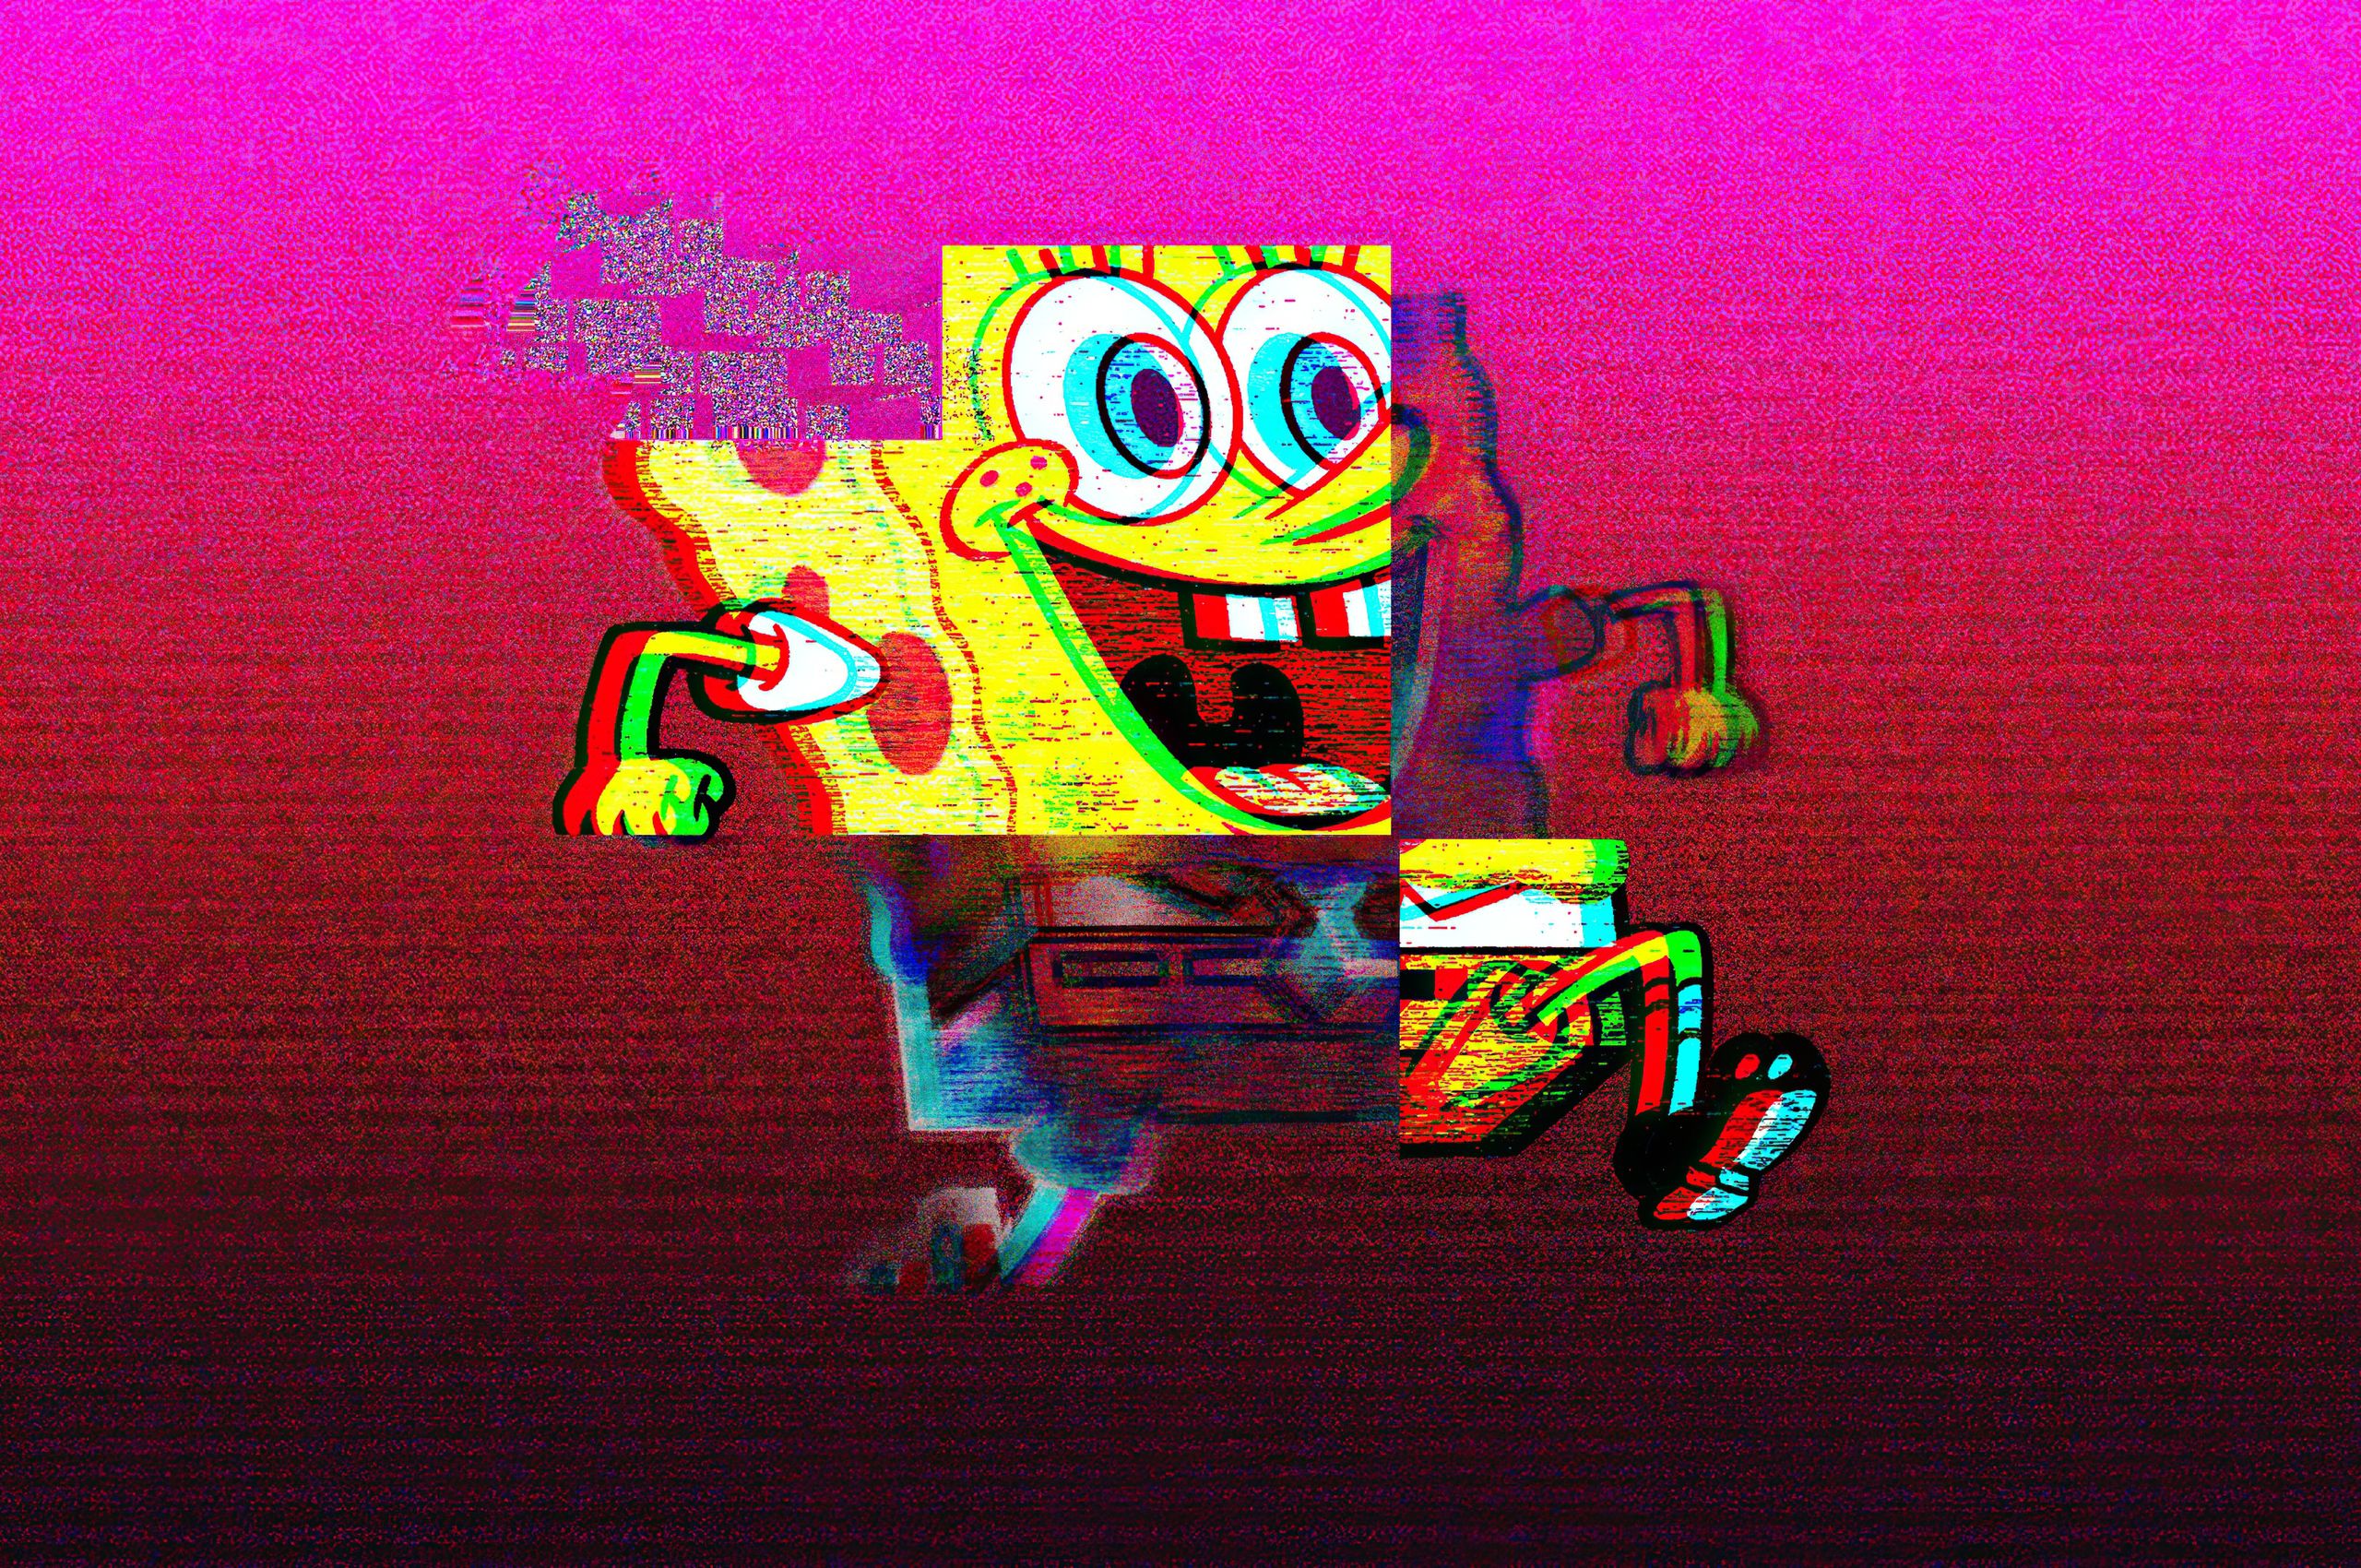 Spongebob Vaporwave 4k Chromebook Pixel HD 4k Wallpaper, Image, Background, Photo and Picture